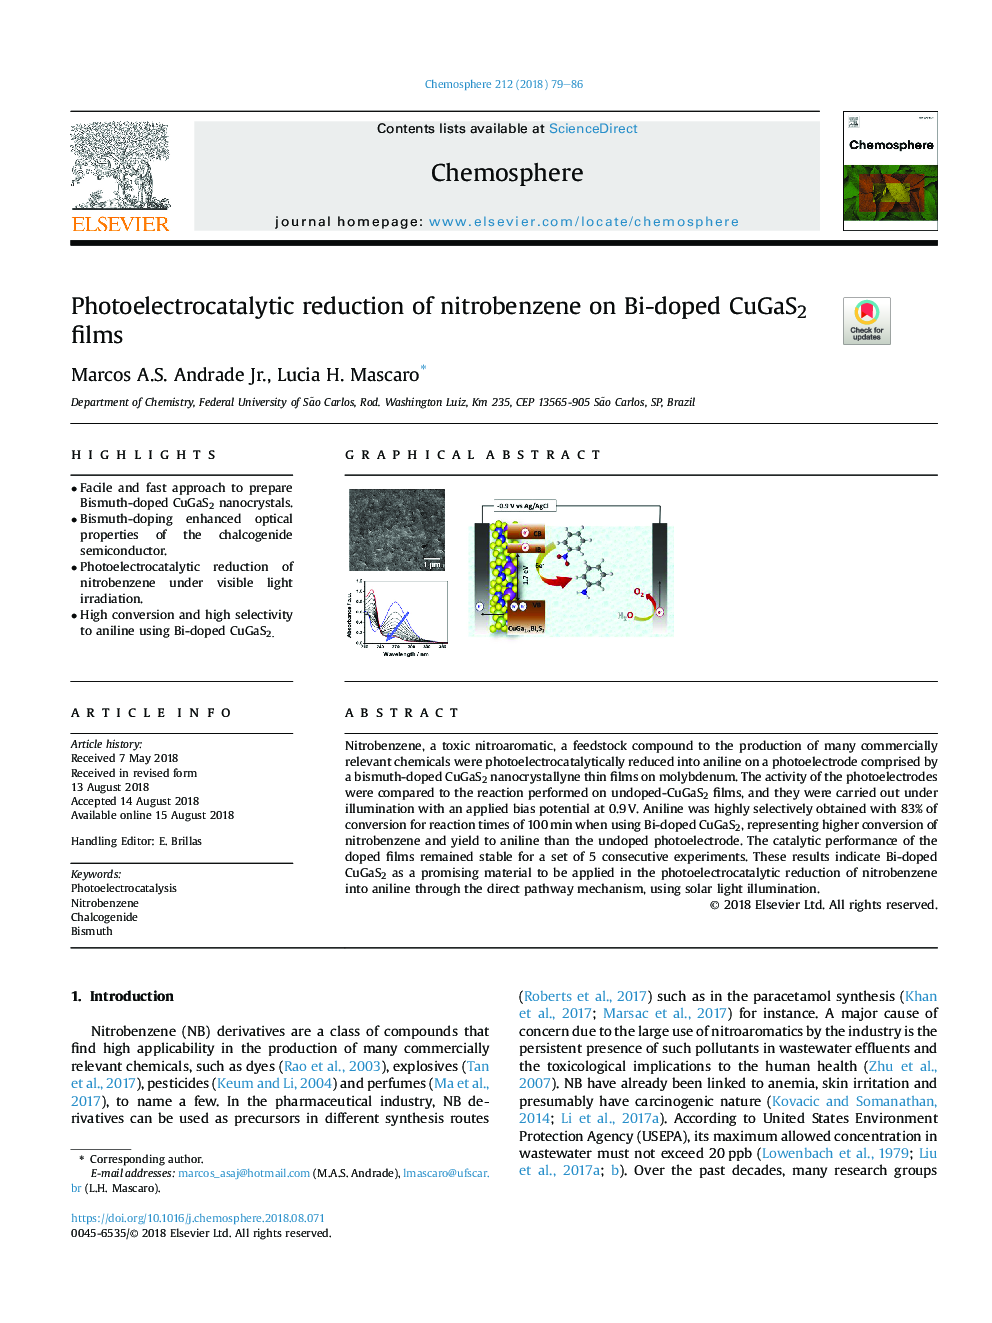 Photoelectrocatalytic reduction of nitrobenzene on Bi-doped CuGaS2 films